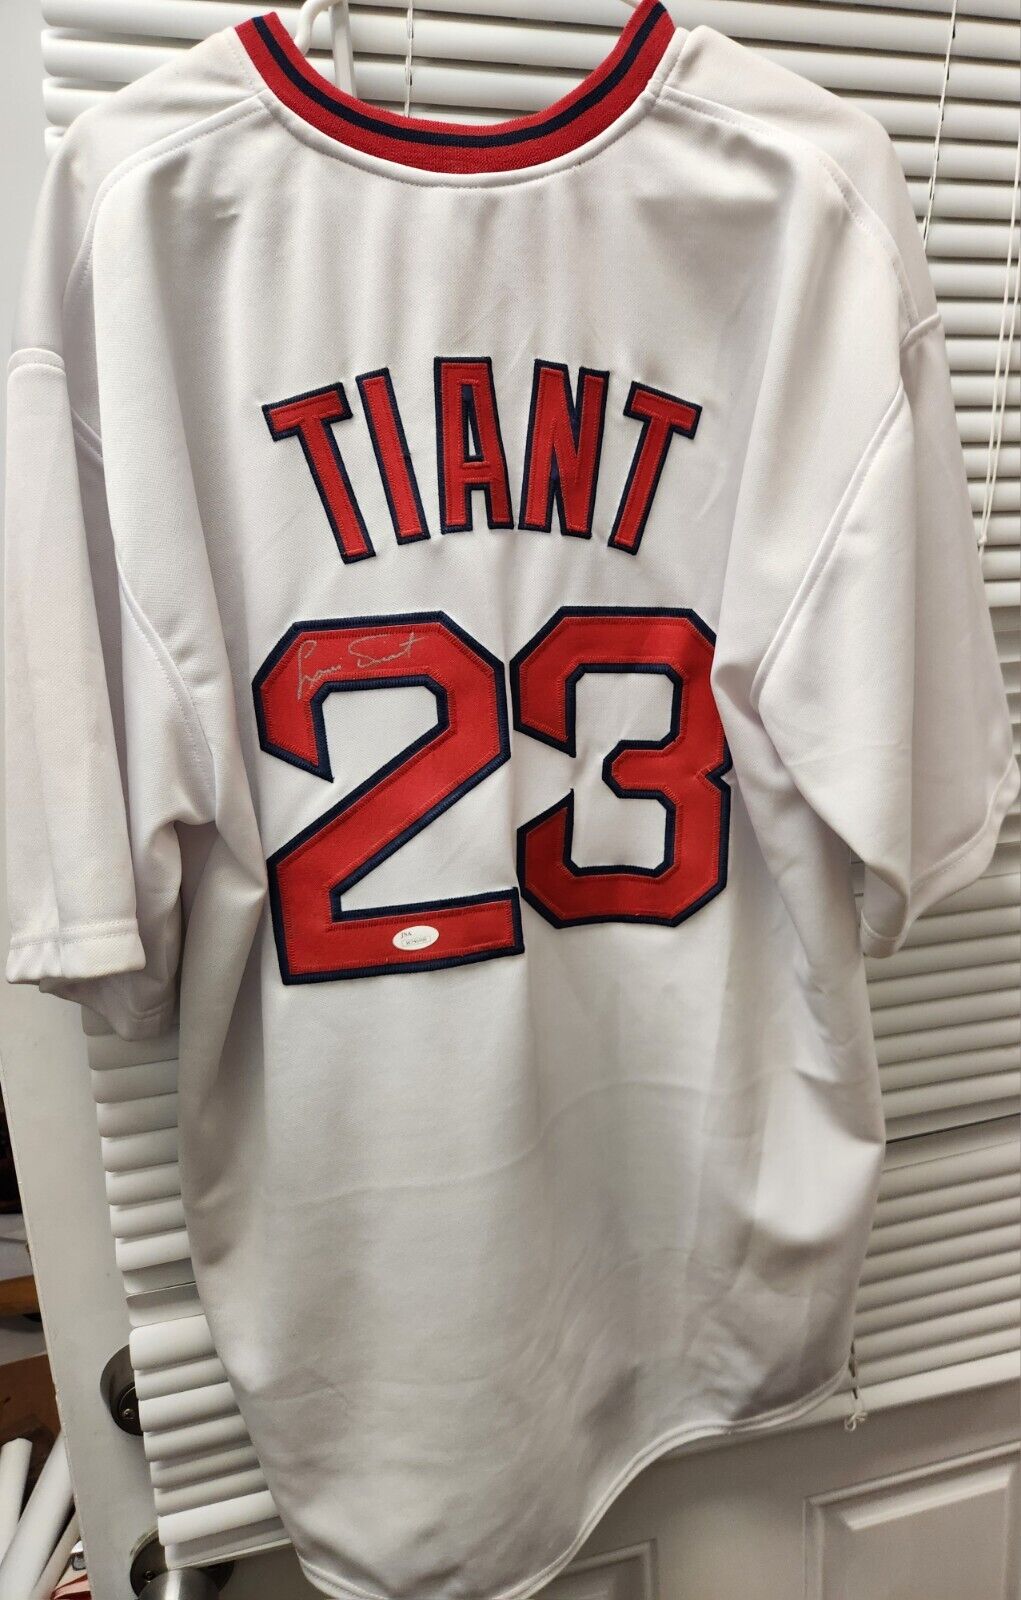 Luis Tiant Signed Replica Boston Red Sox Home Jersey JSA COA